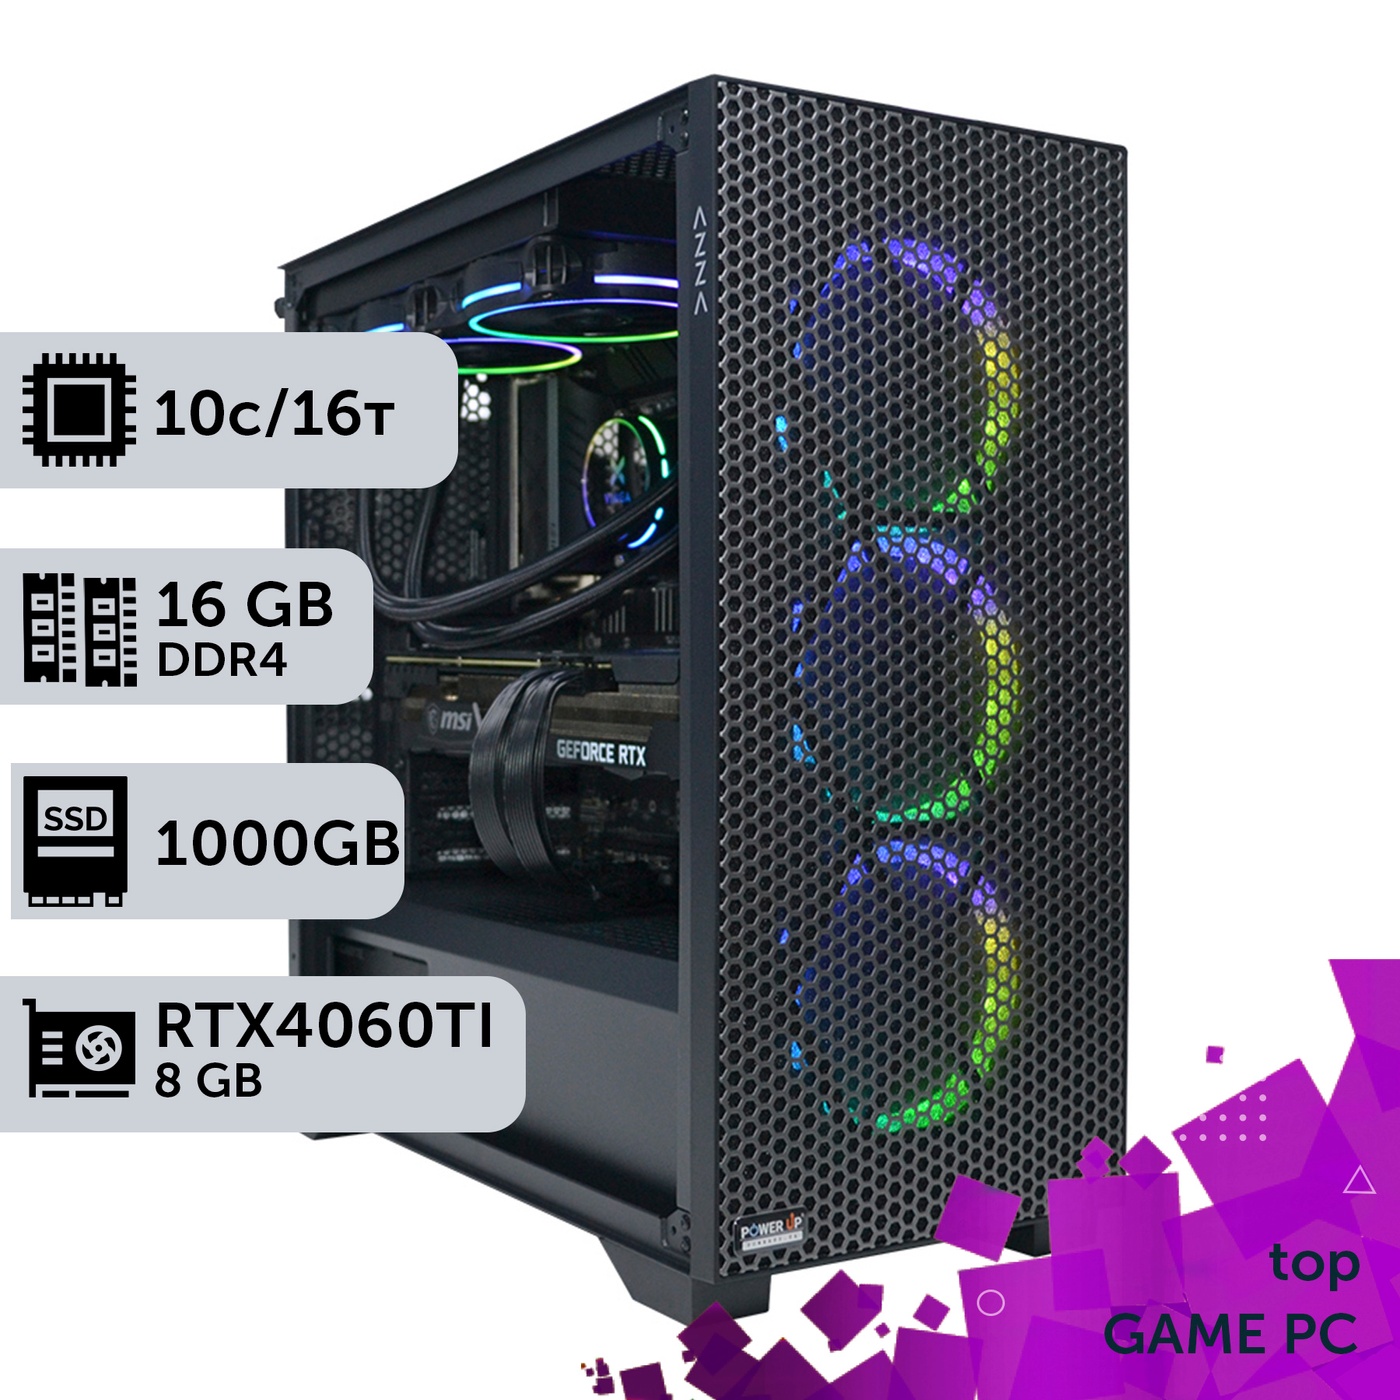 Игровой компьютер GamePC TOP #210 Core i5 13400F/16 GB/SSD 1TB/GeForce RTX 4060Ti 8GB